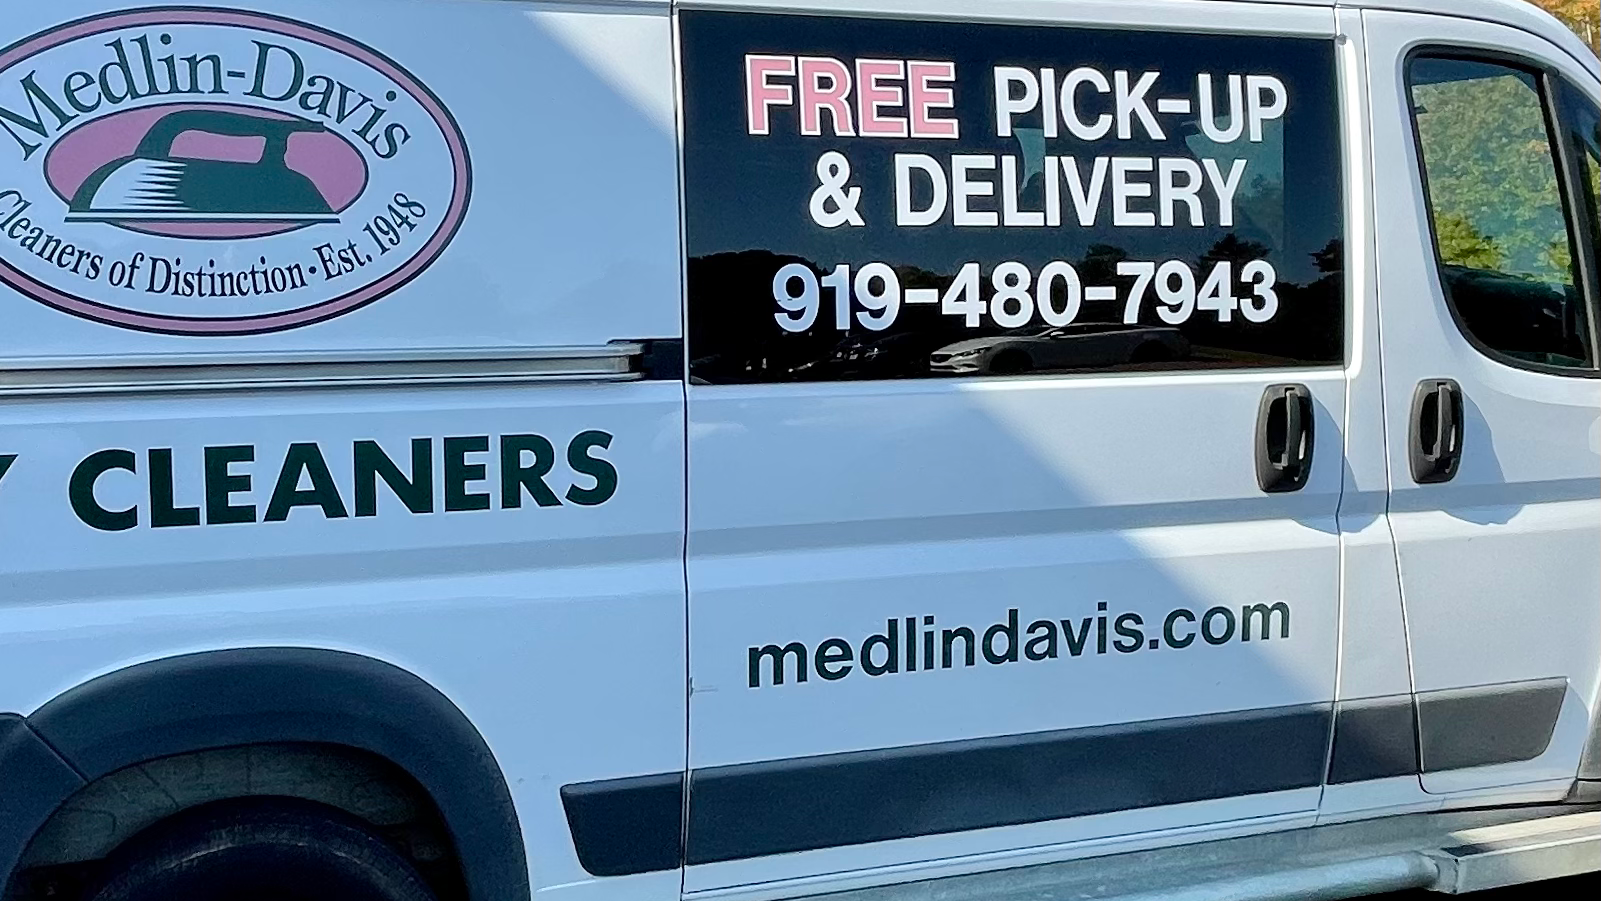 Medlin - Davis Cleaners